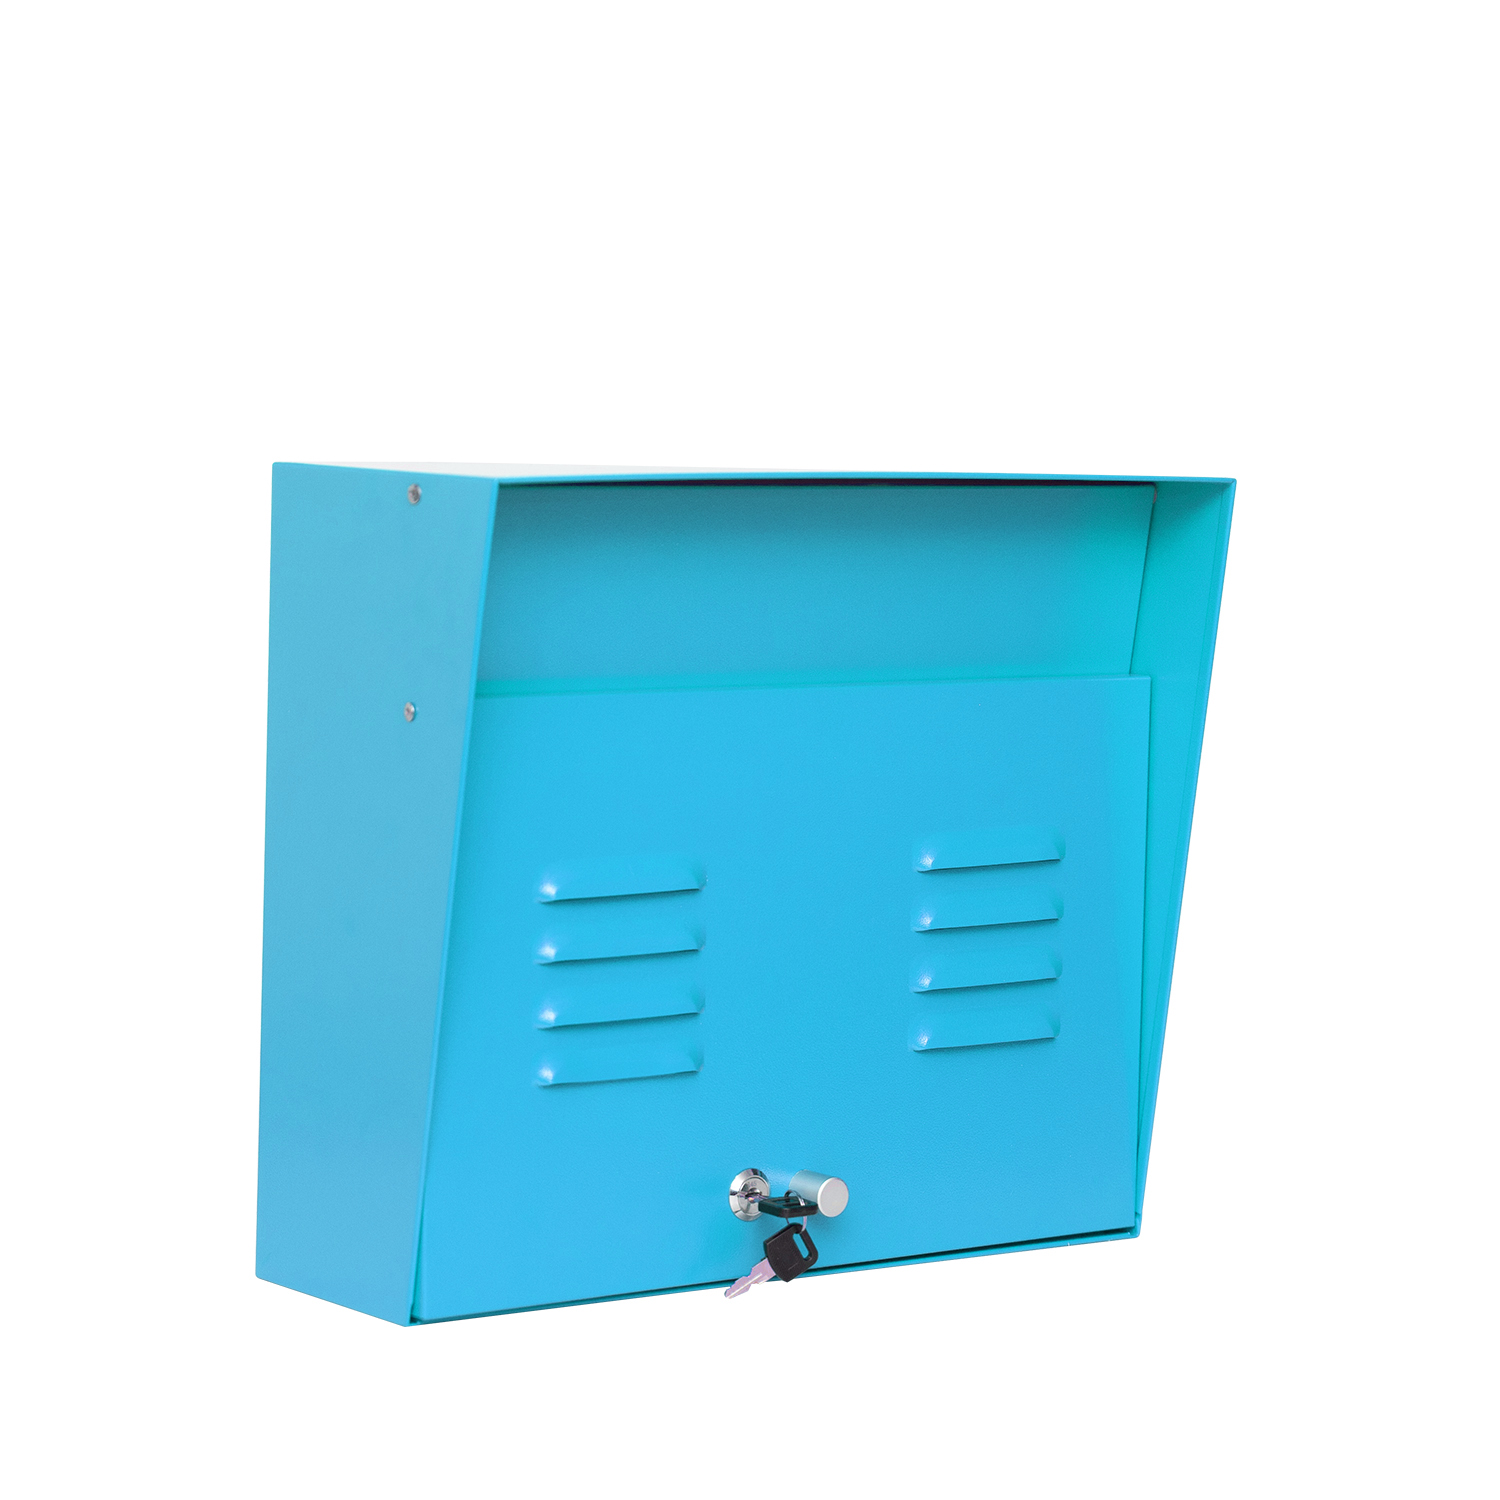 Galvanized Metal Key post box outdoor standing locking Mailboxes